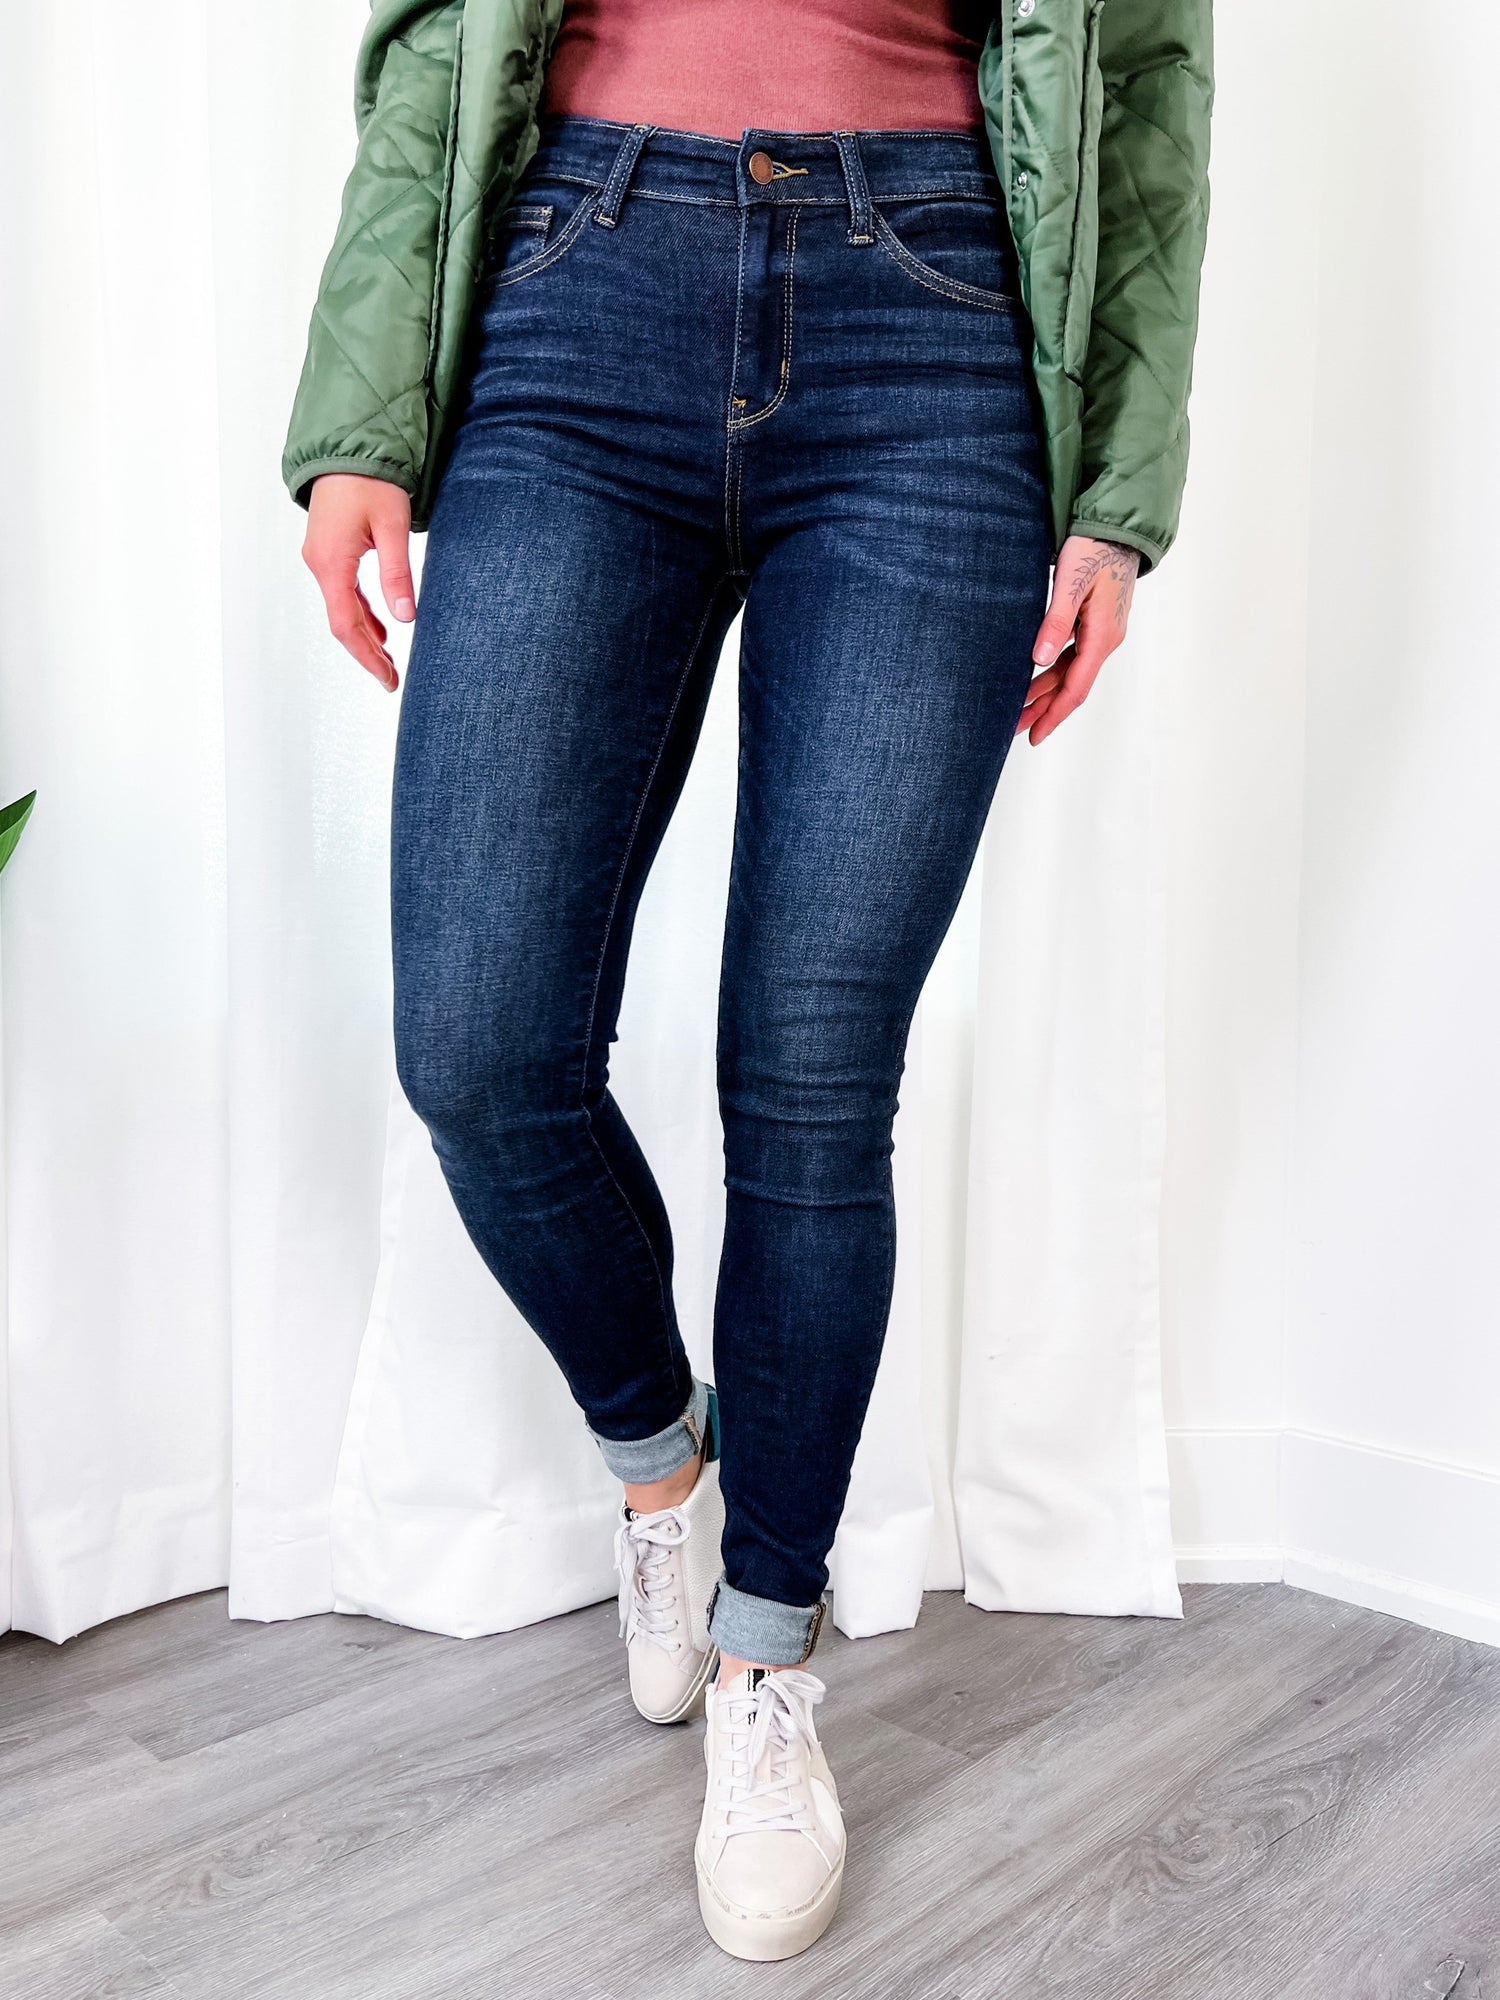 PLUS/REG Judy Blue Long Tall Sally Non-Distressed Skinny Jeans (34" INSEAM!) 82152 DK